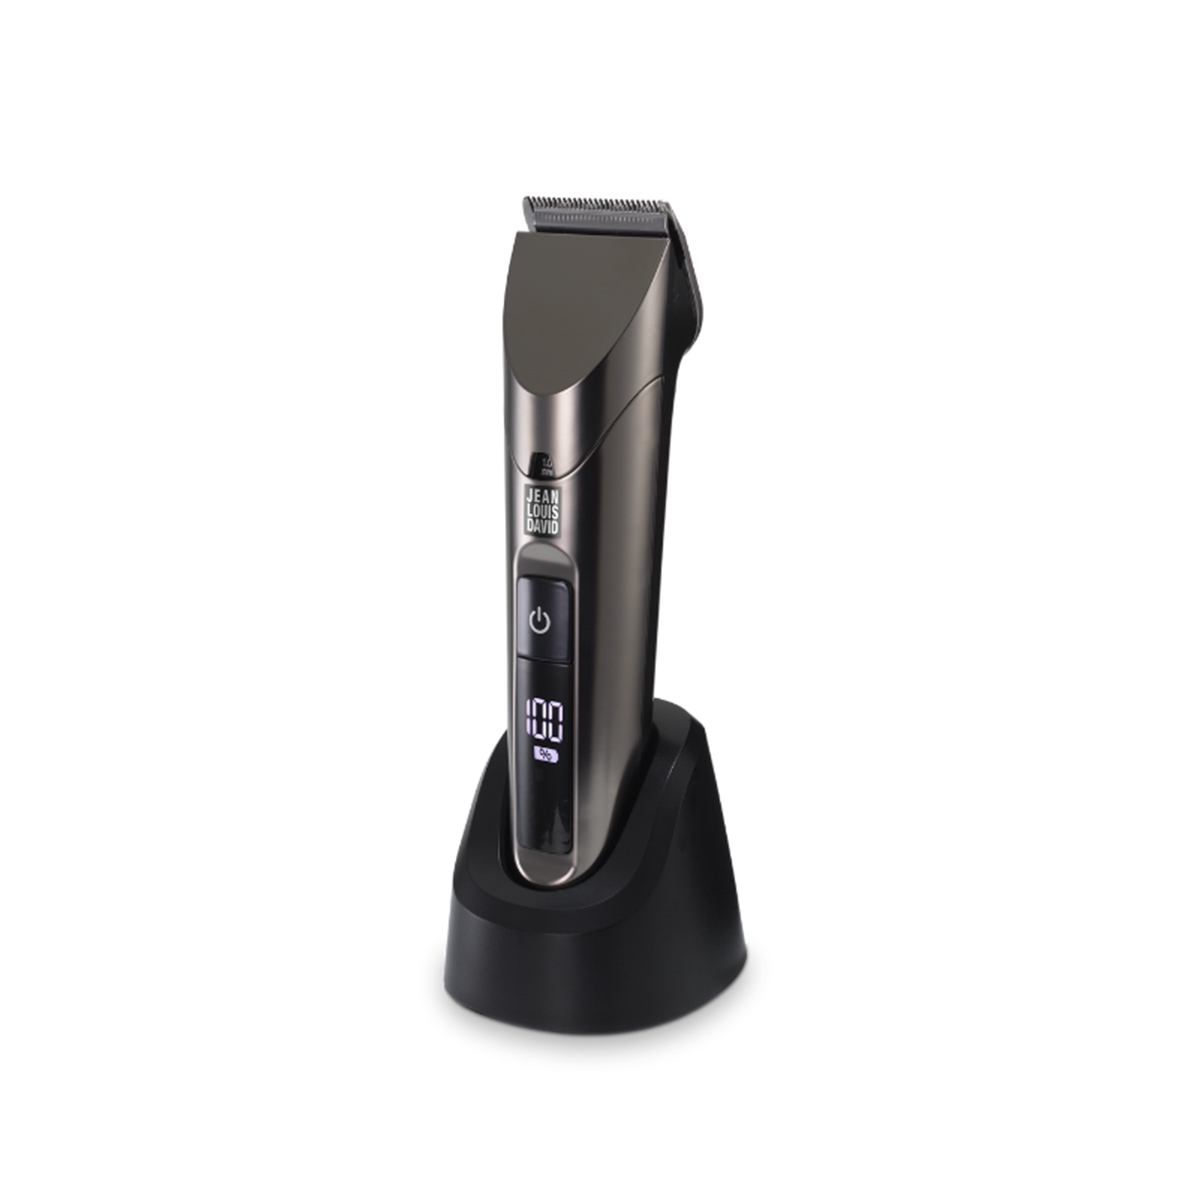 Electric Shaver - Rechargeable Jean Louis David Tond Pro 39960